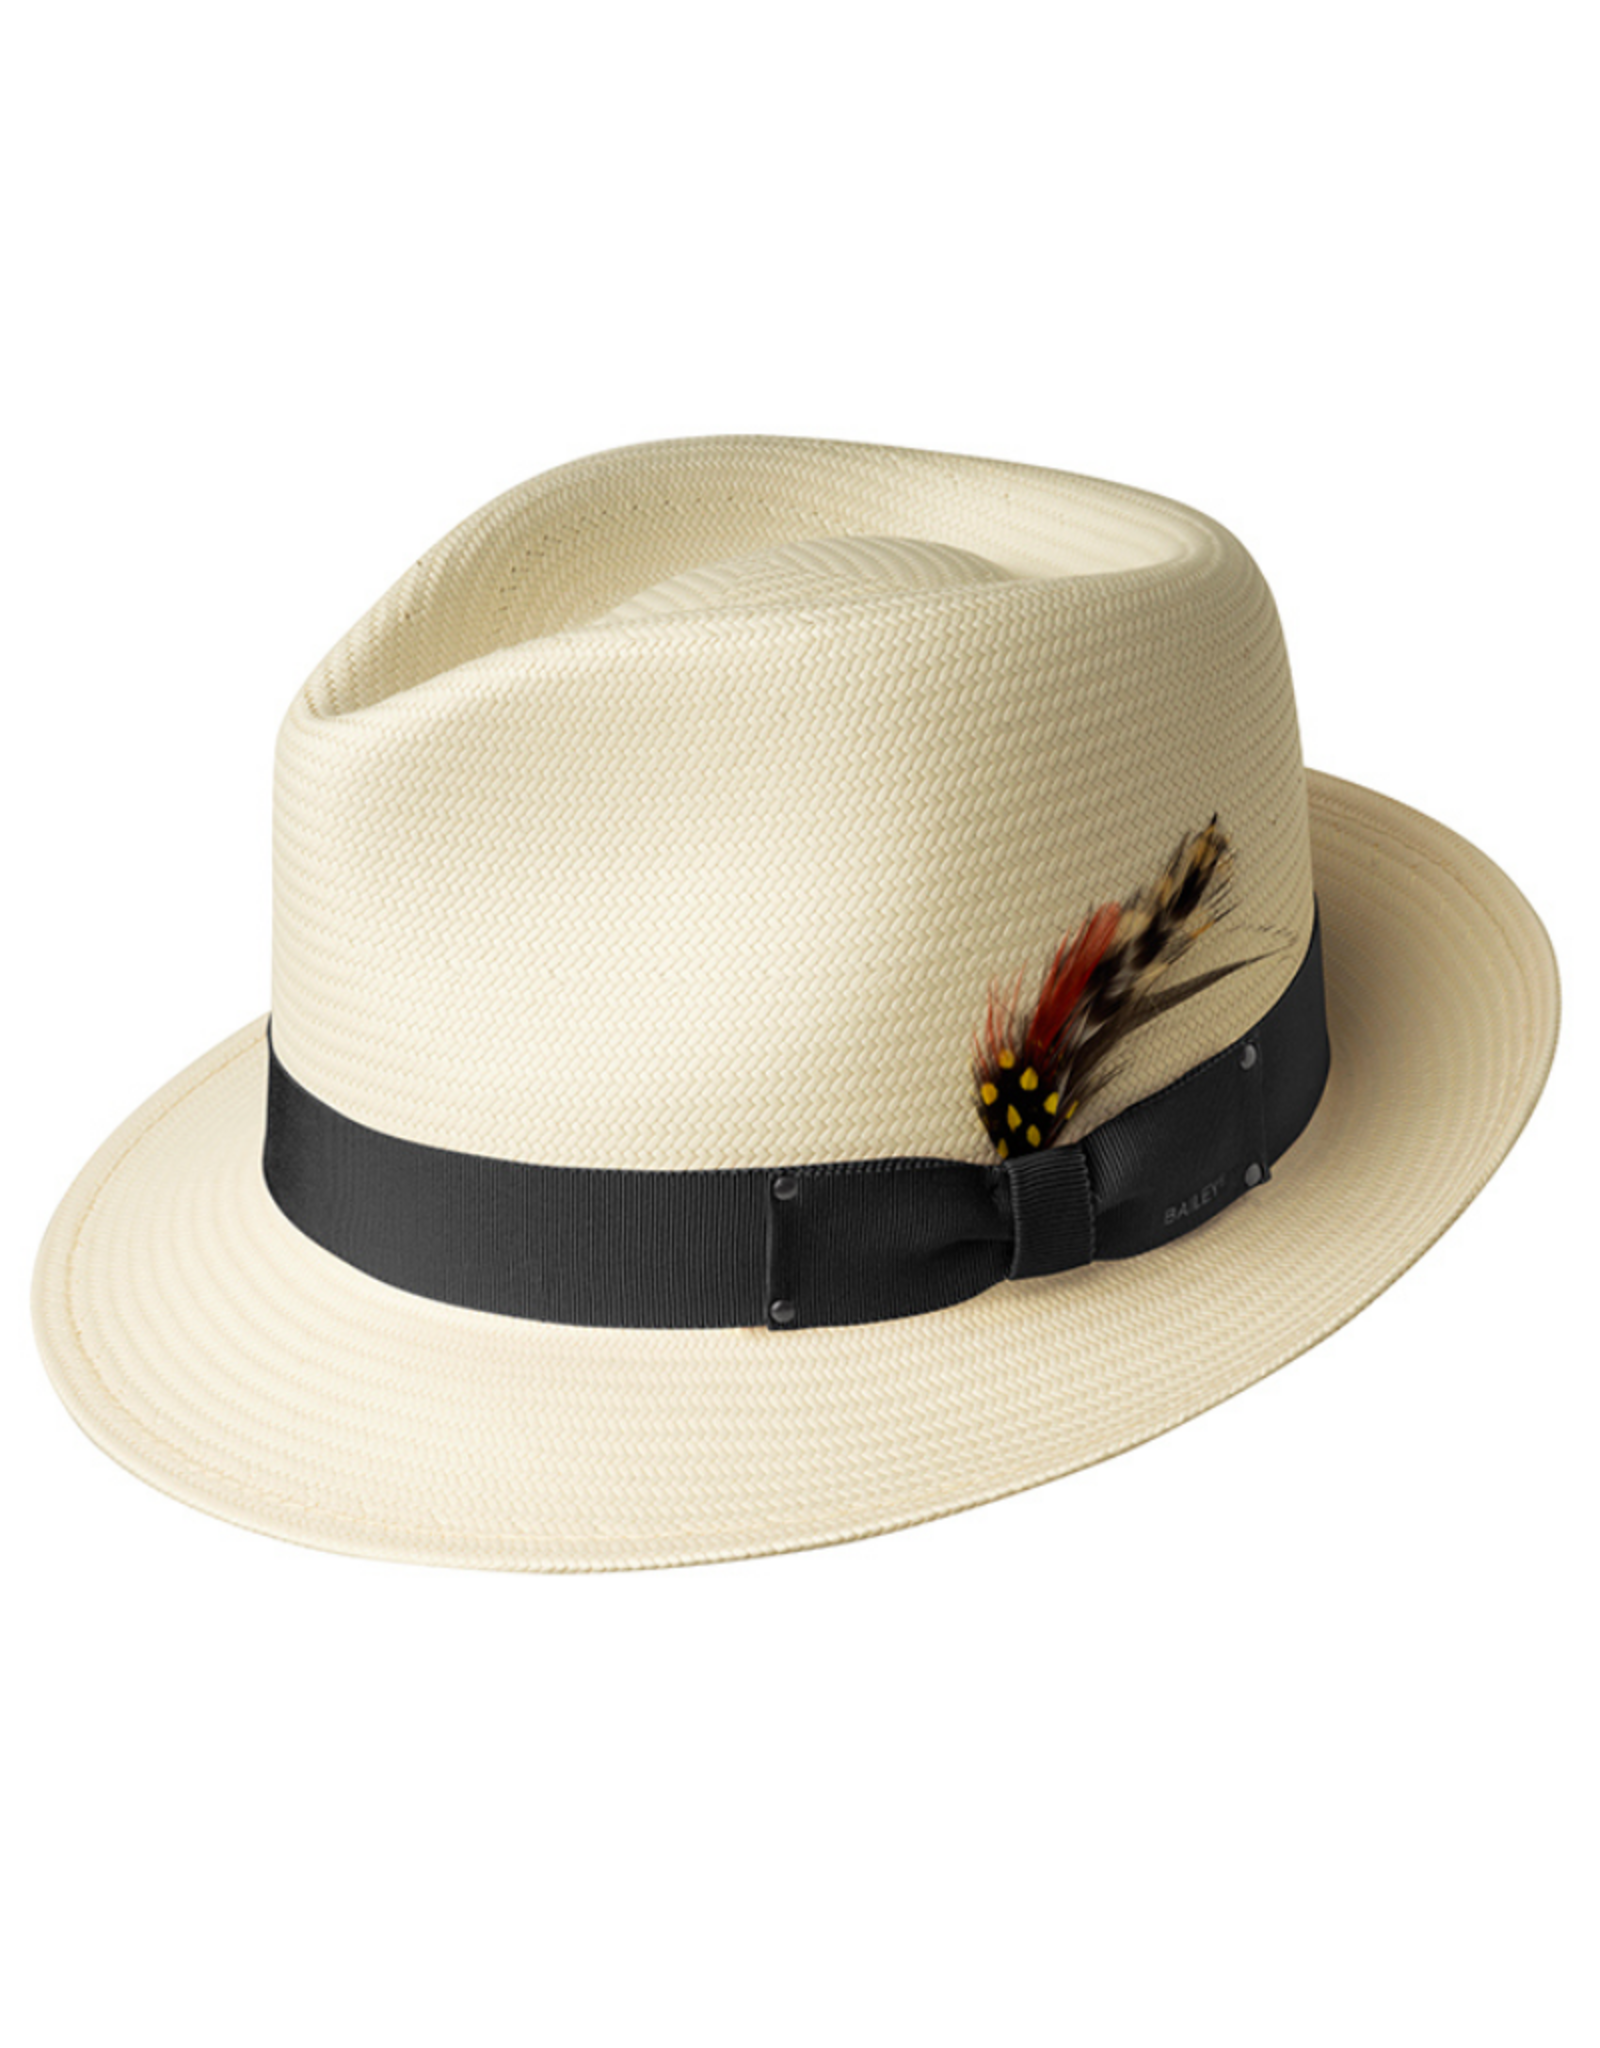 Bailey Hat Co. HAT-FEDORA "GUTHRIE" SHANTUNG PANAMA